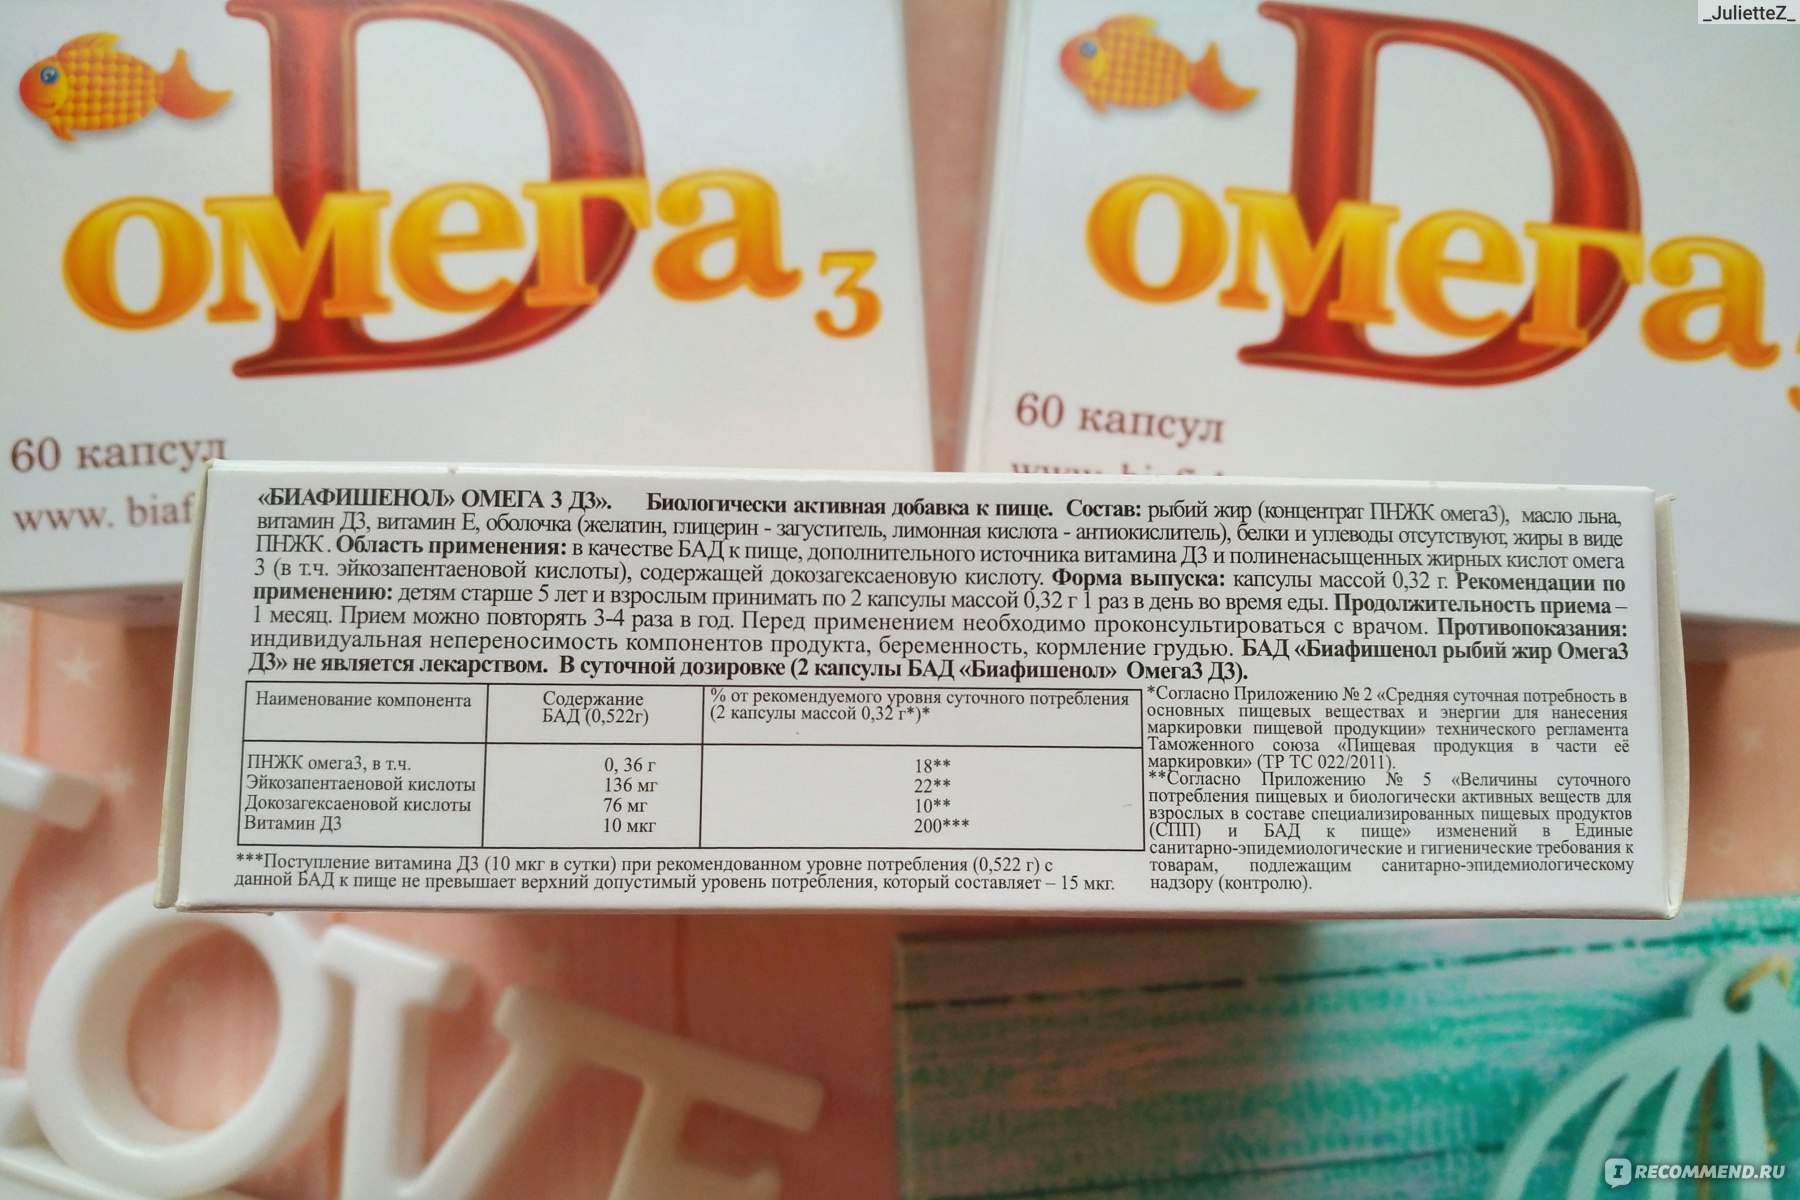 Омега и витамин д3 одно и тоже. Биафишенол Омега-3 d3. Биафишенол Омега 3 д3. Омега-3 с витамином д. Омега-3 с витамином д3.